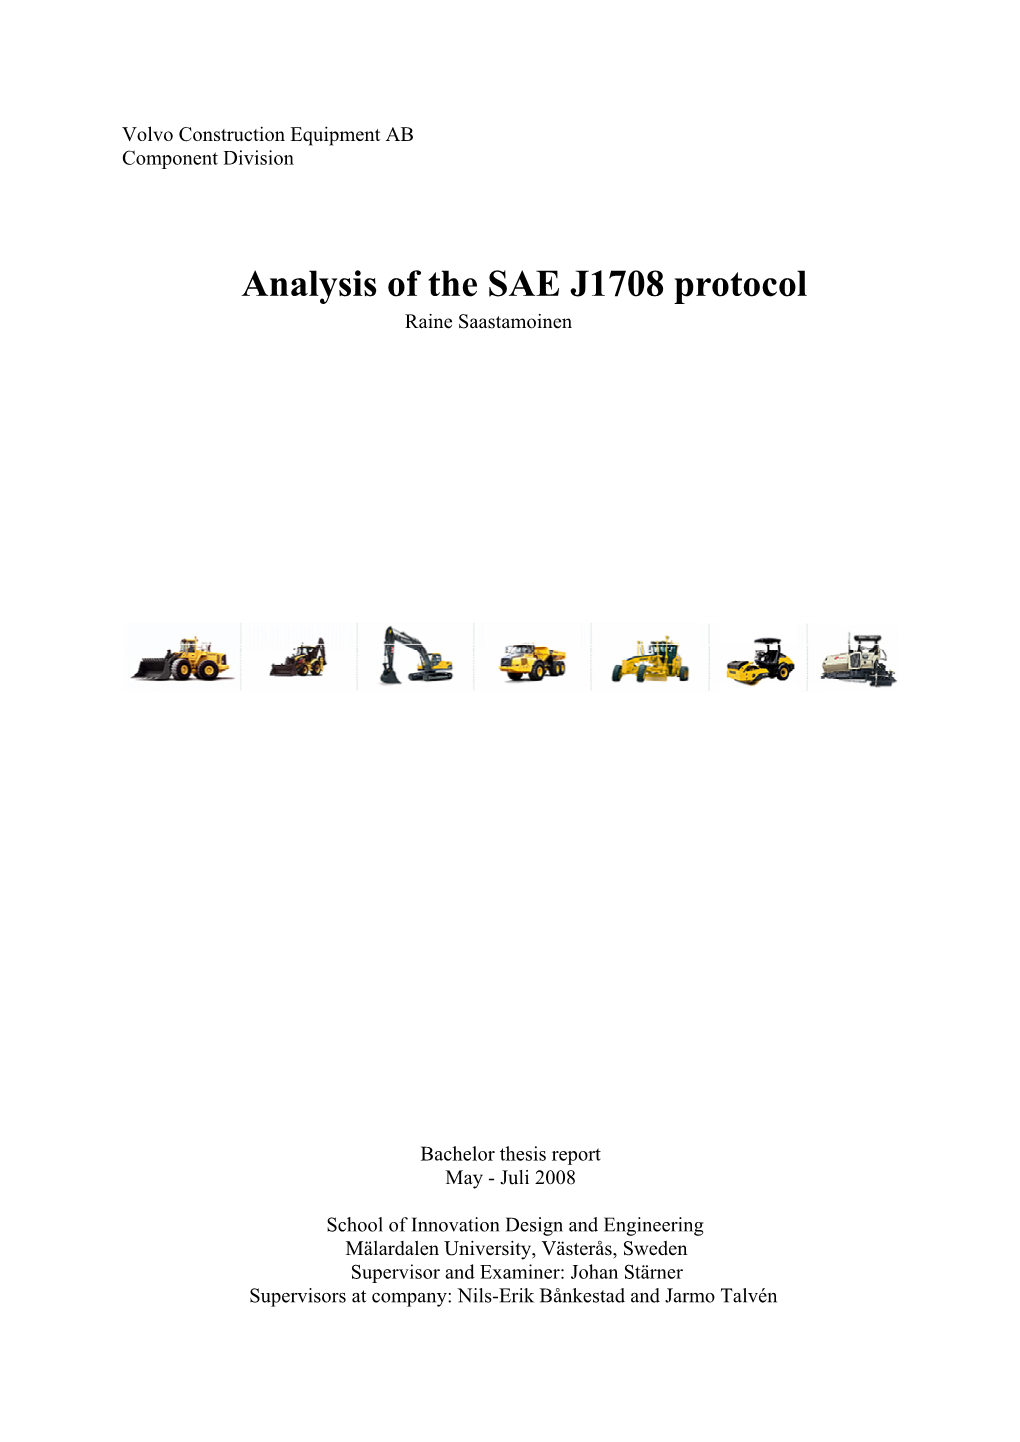 Analysis of the SAE J1708 Protocol Raine Saastamoinen